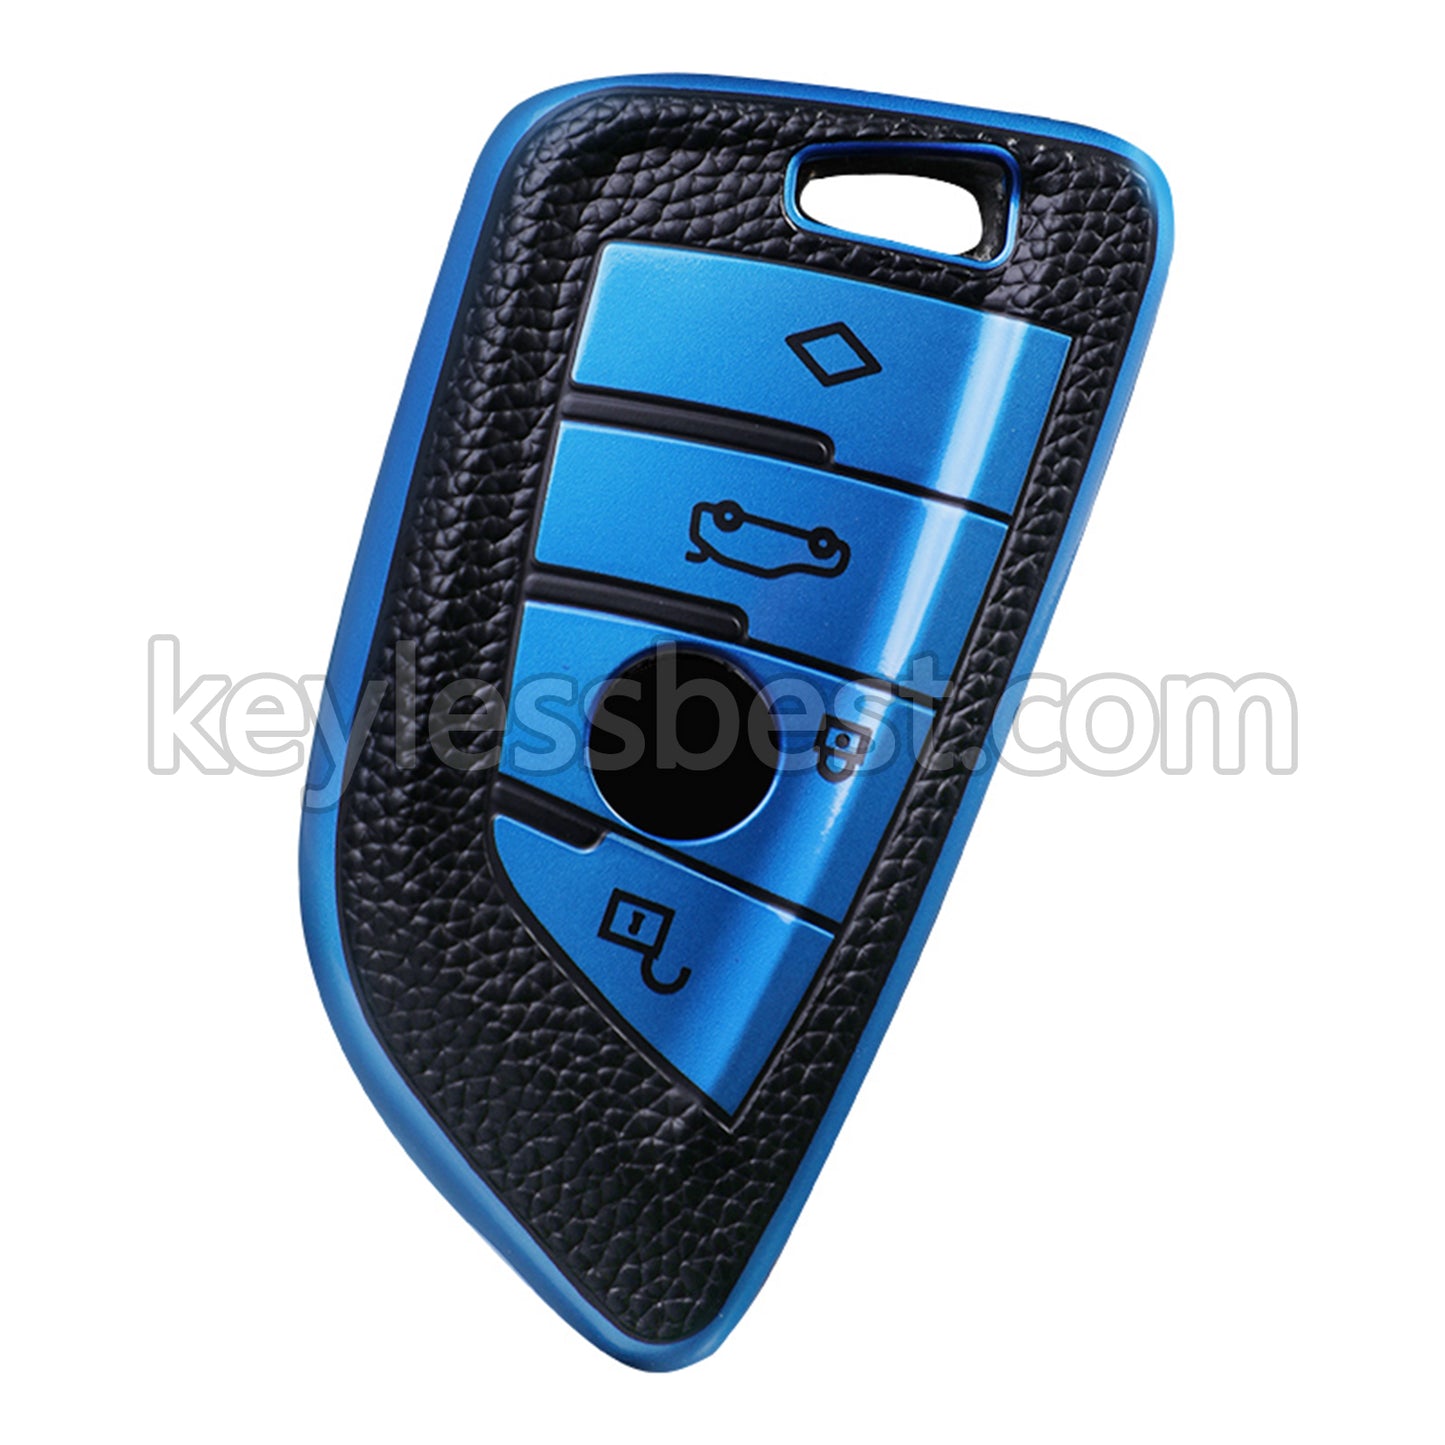 TPU Car Key cover For BMW Car Key cover case holder